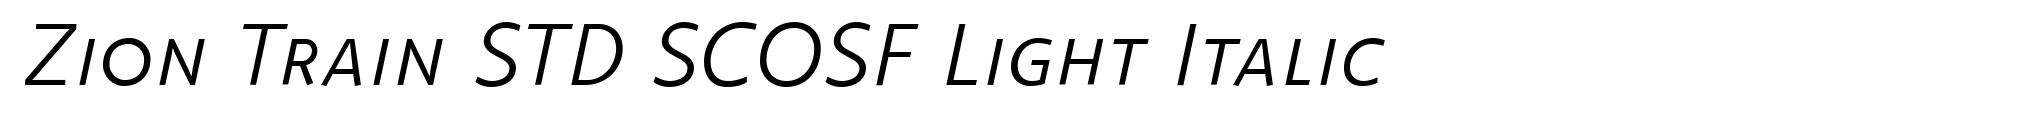 Zion Train STD SCOSF Light Italic image